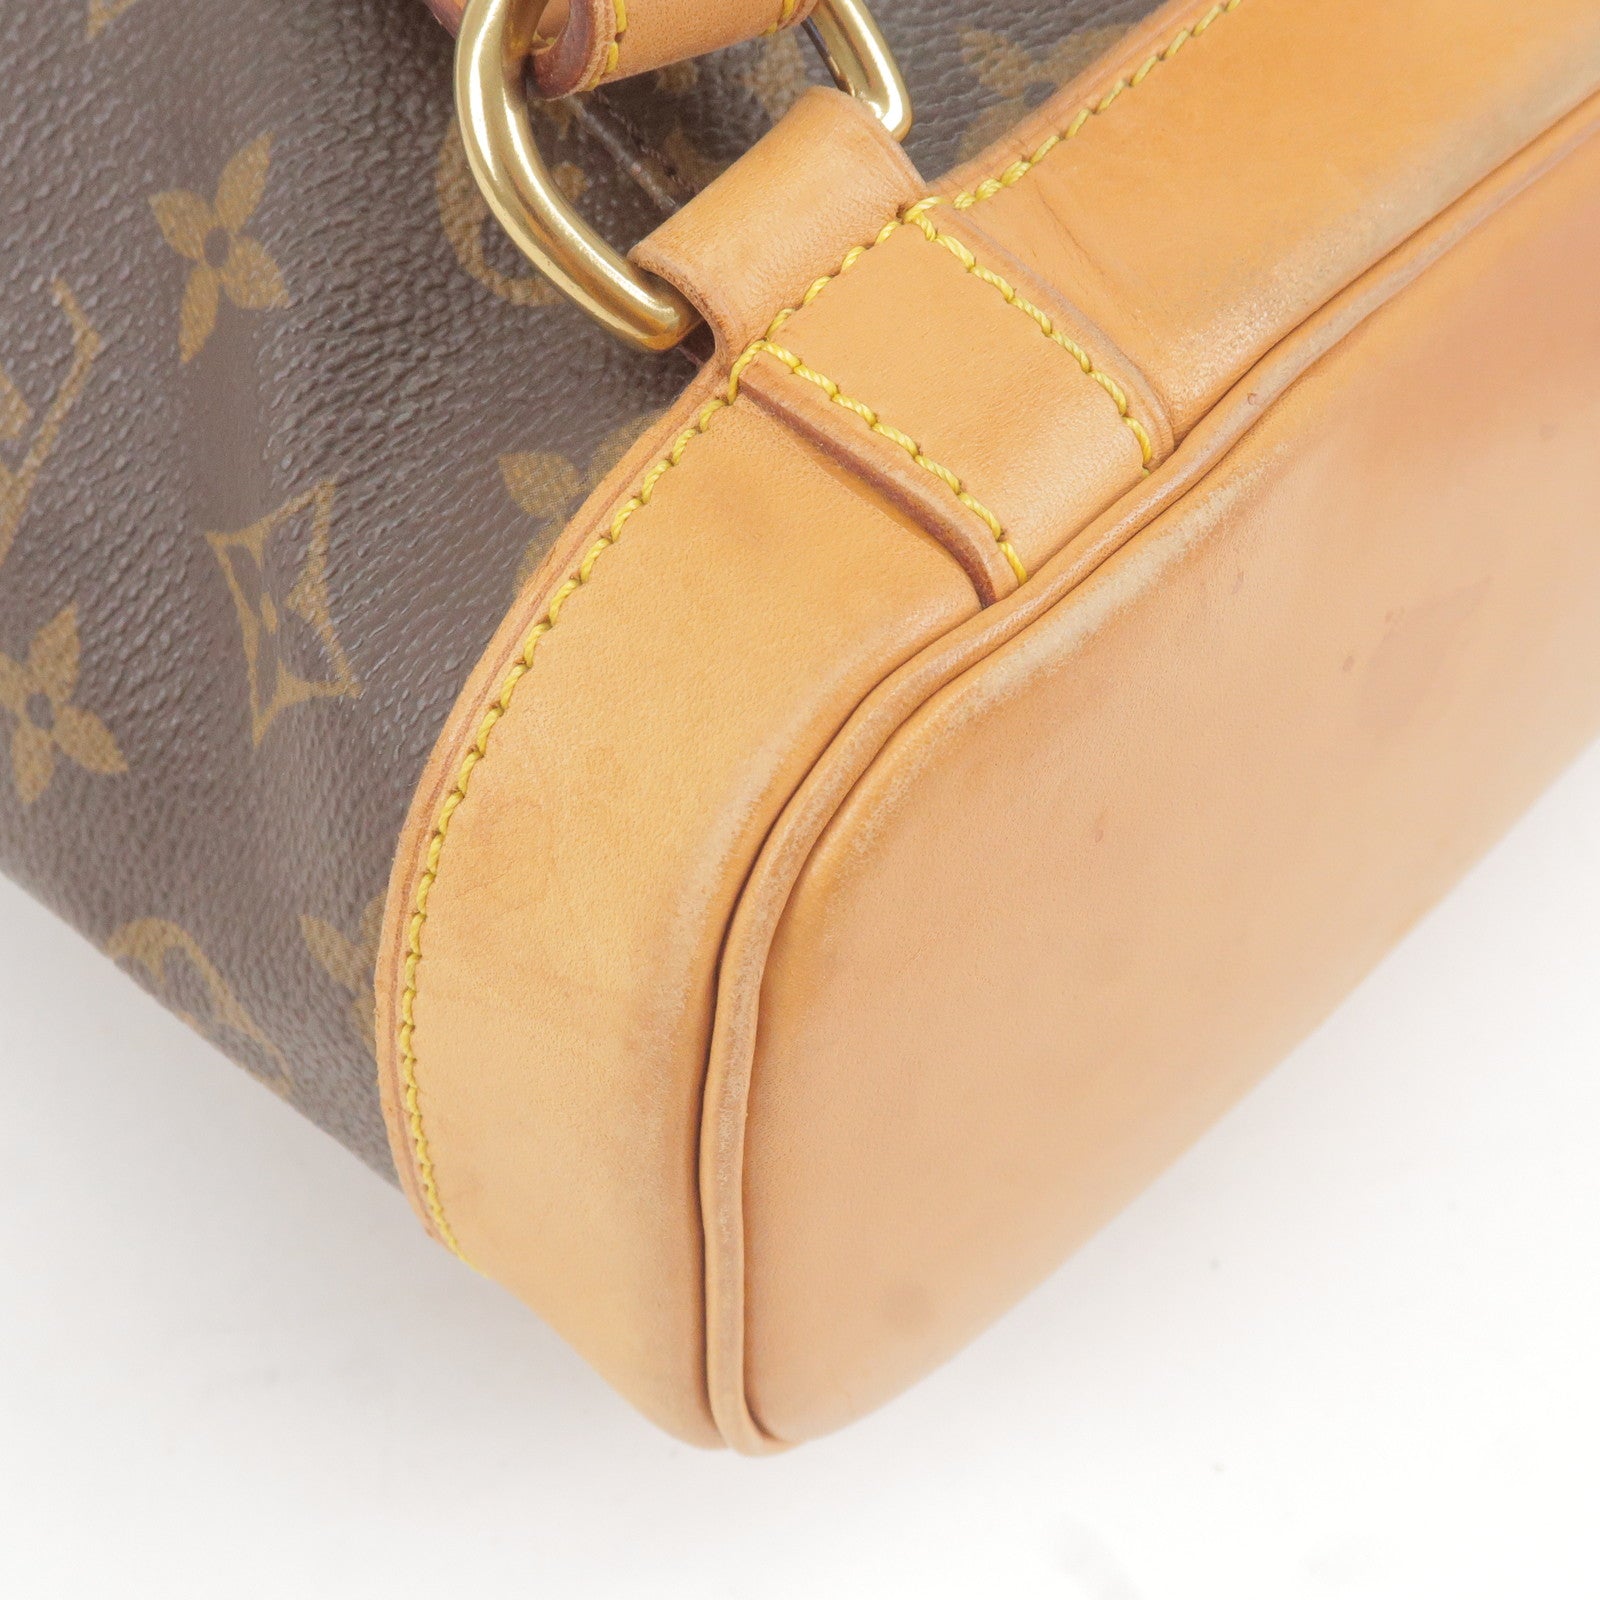 Louis Vuitton pre-owned Boite Flacons vanity bag, Brown